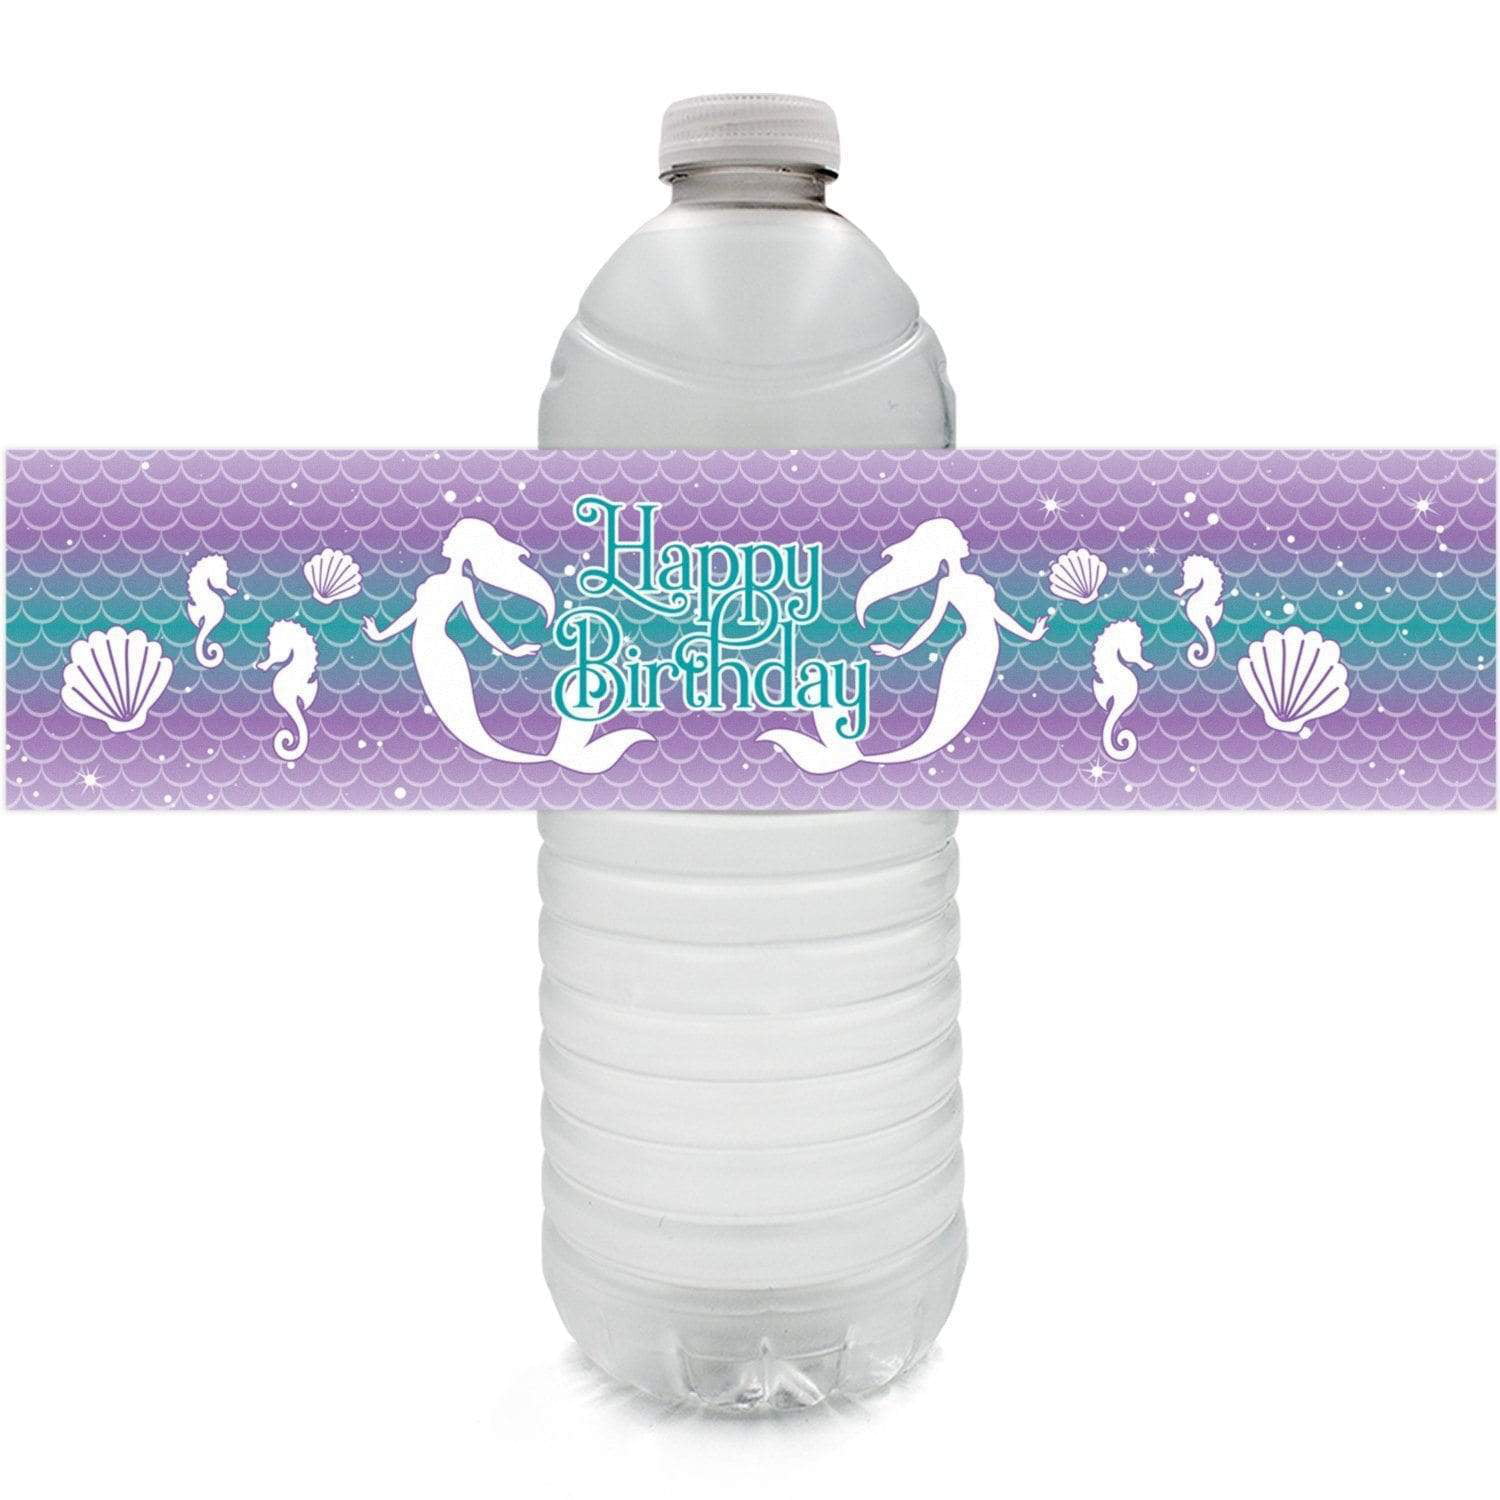 mermaid-birthday-party-water-bottle-labels-24-count-distinctivs-walmart-walmart